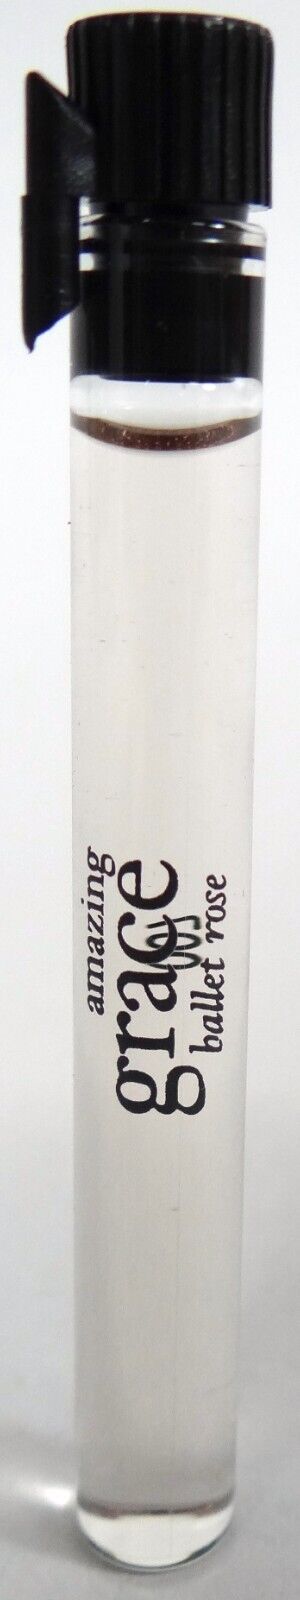 Philosophy Amazing Grace Perfume EDT Mini Travel Size Sample .05 oz 1.5 ml